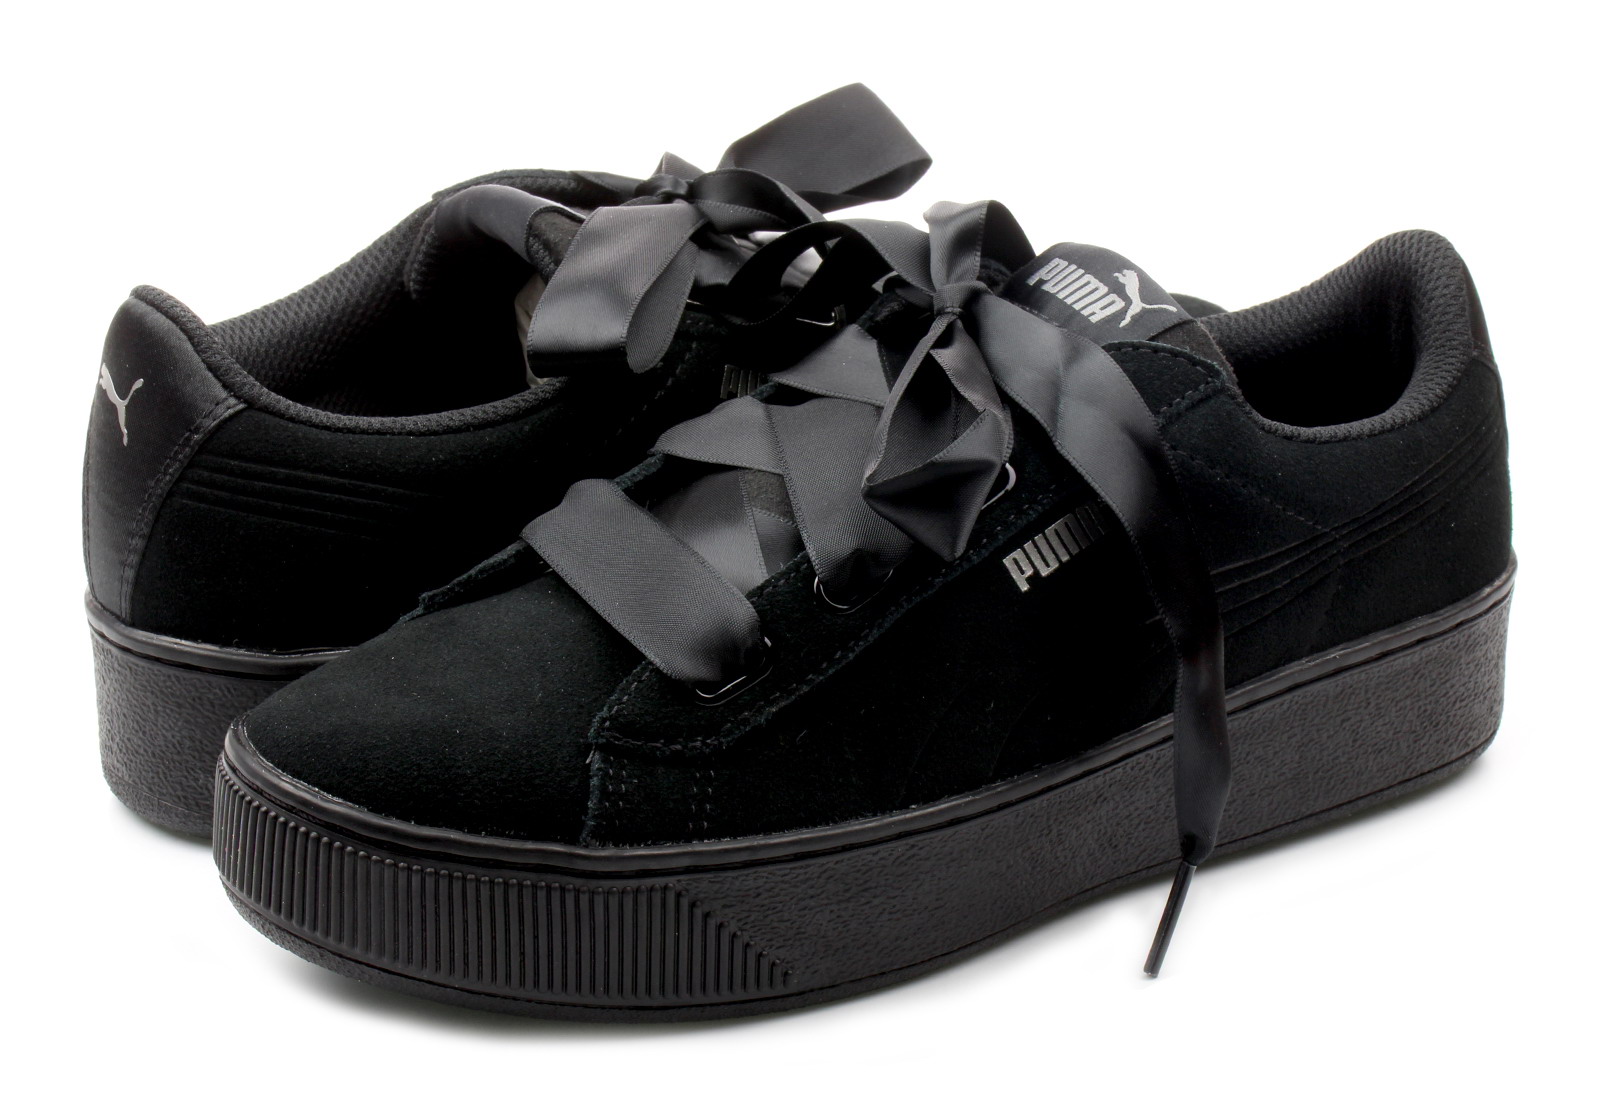 Puma Niske Cipele Crne Tenisice - Puma Vikky Platform Ribbon S - Office  Shoes - Online trgovina obuće